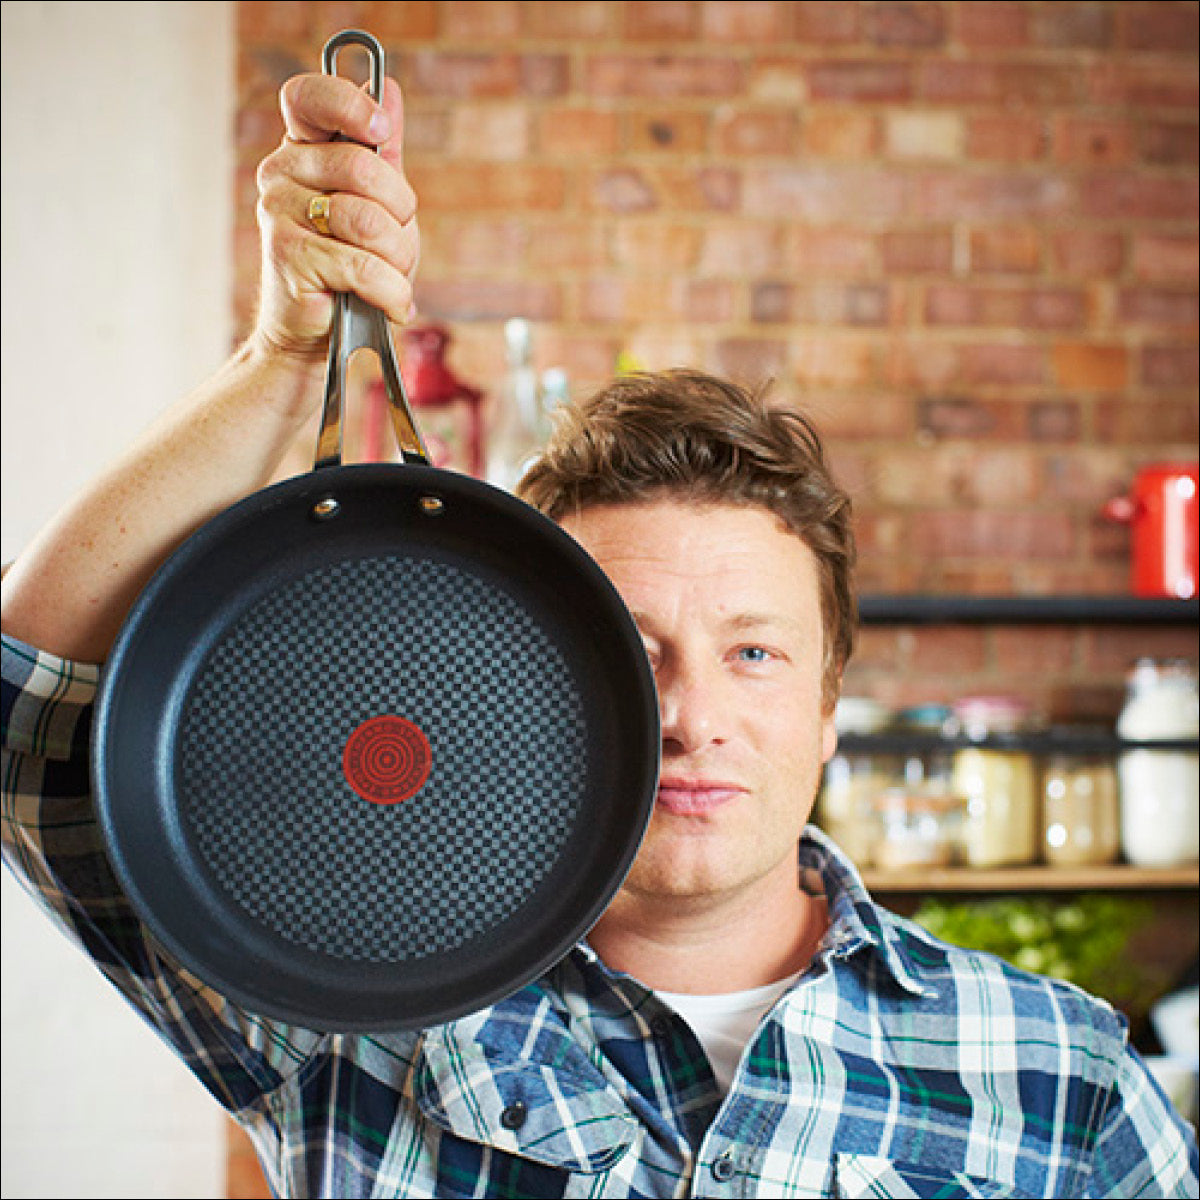 Jamie Oliver Cookware